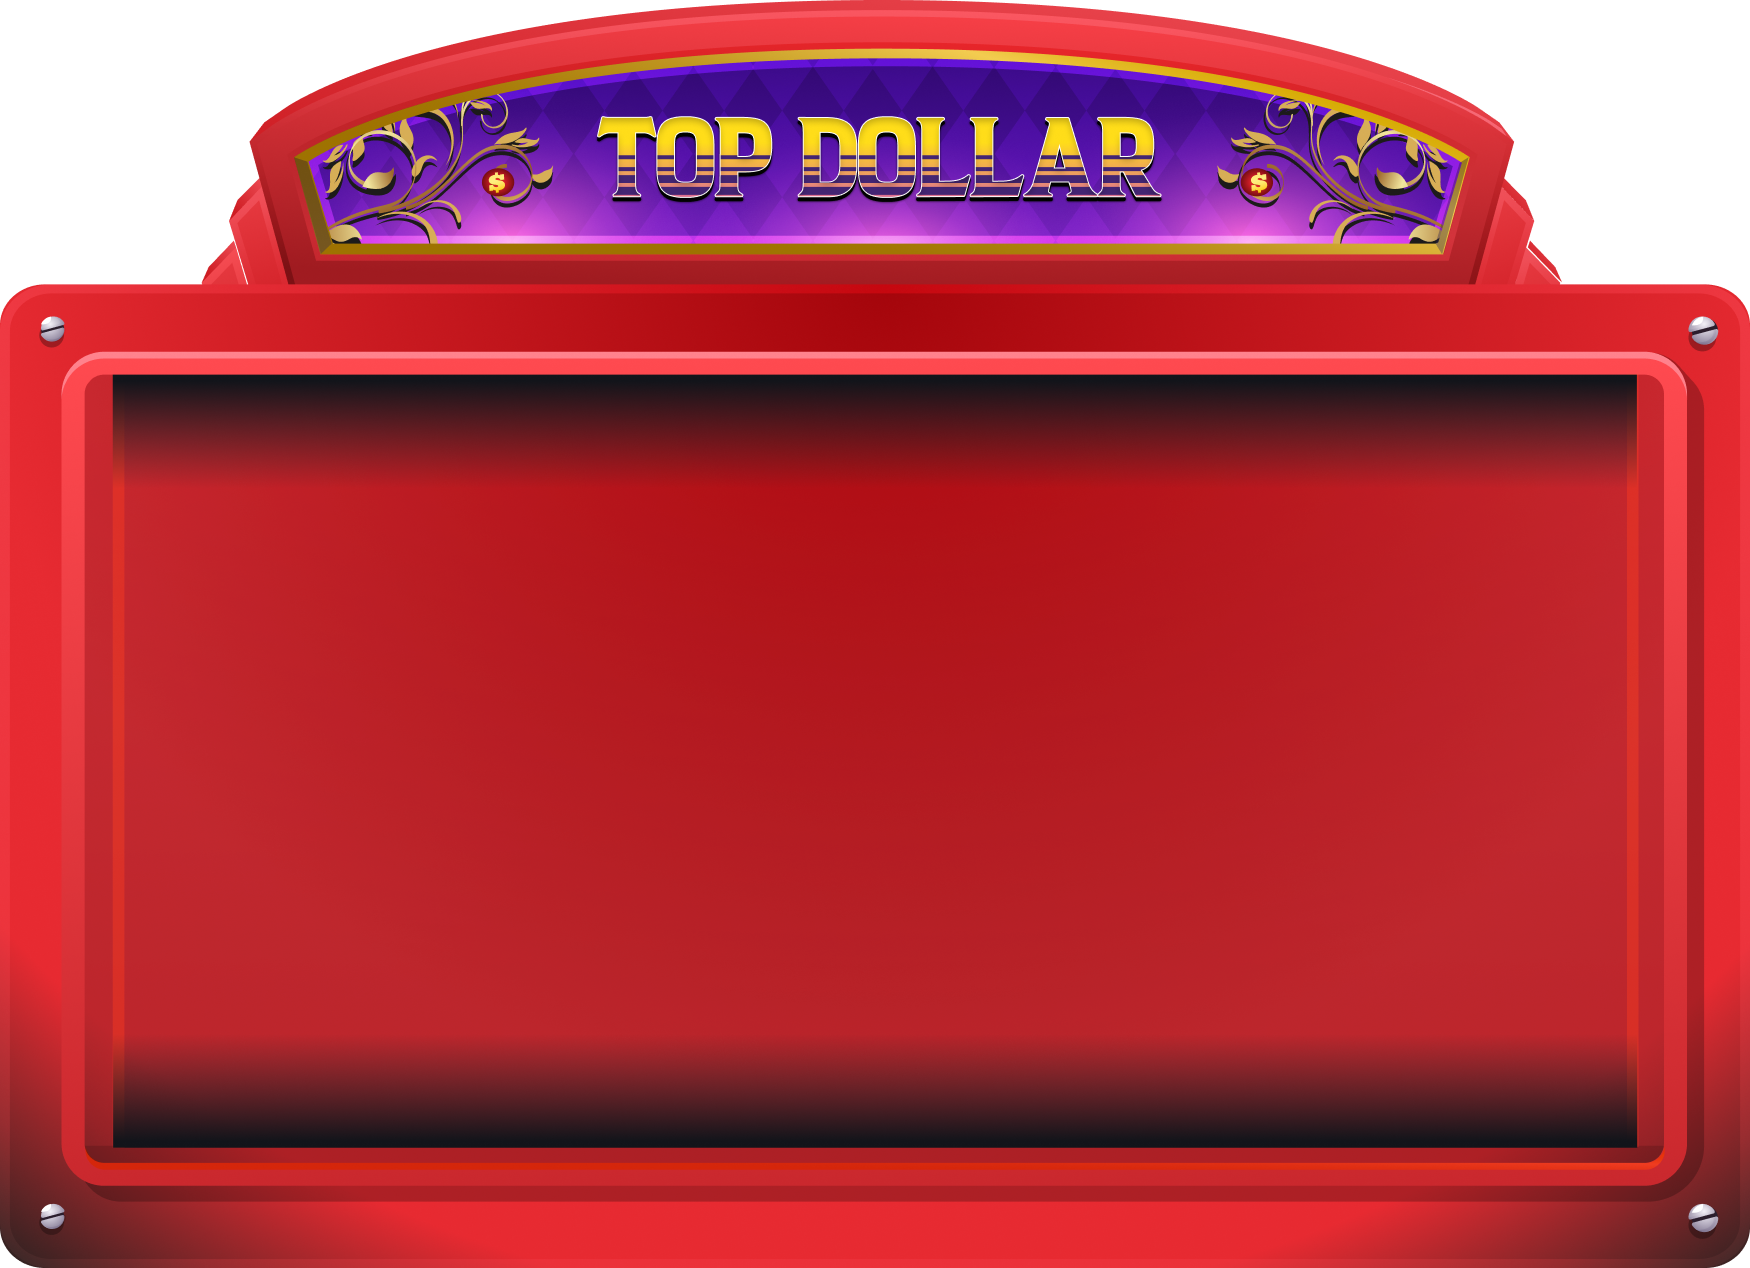 TopDollar Slot